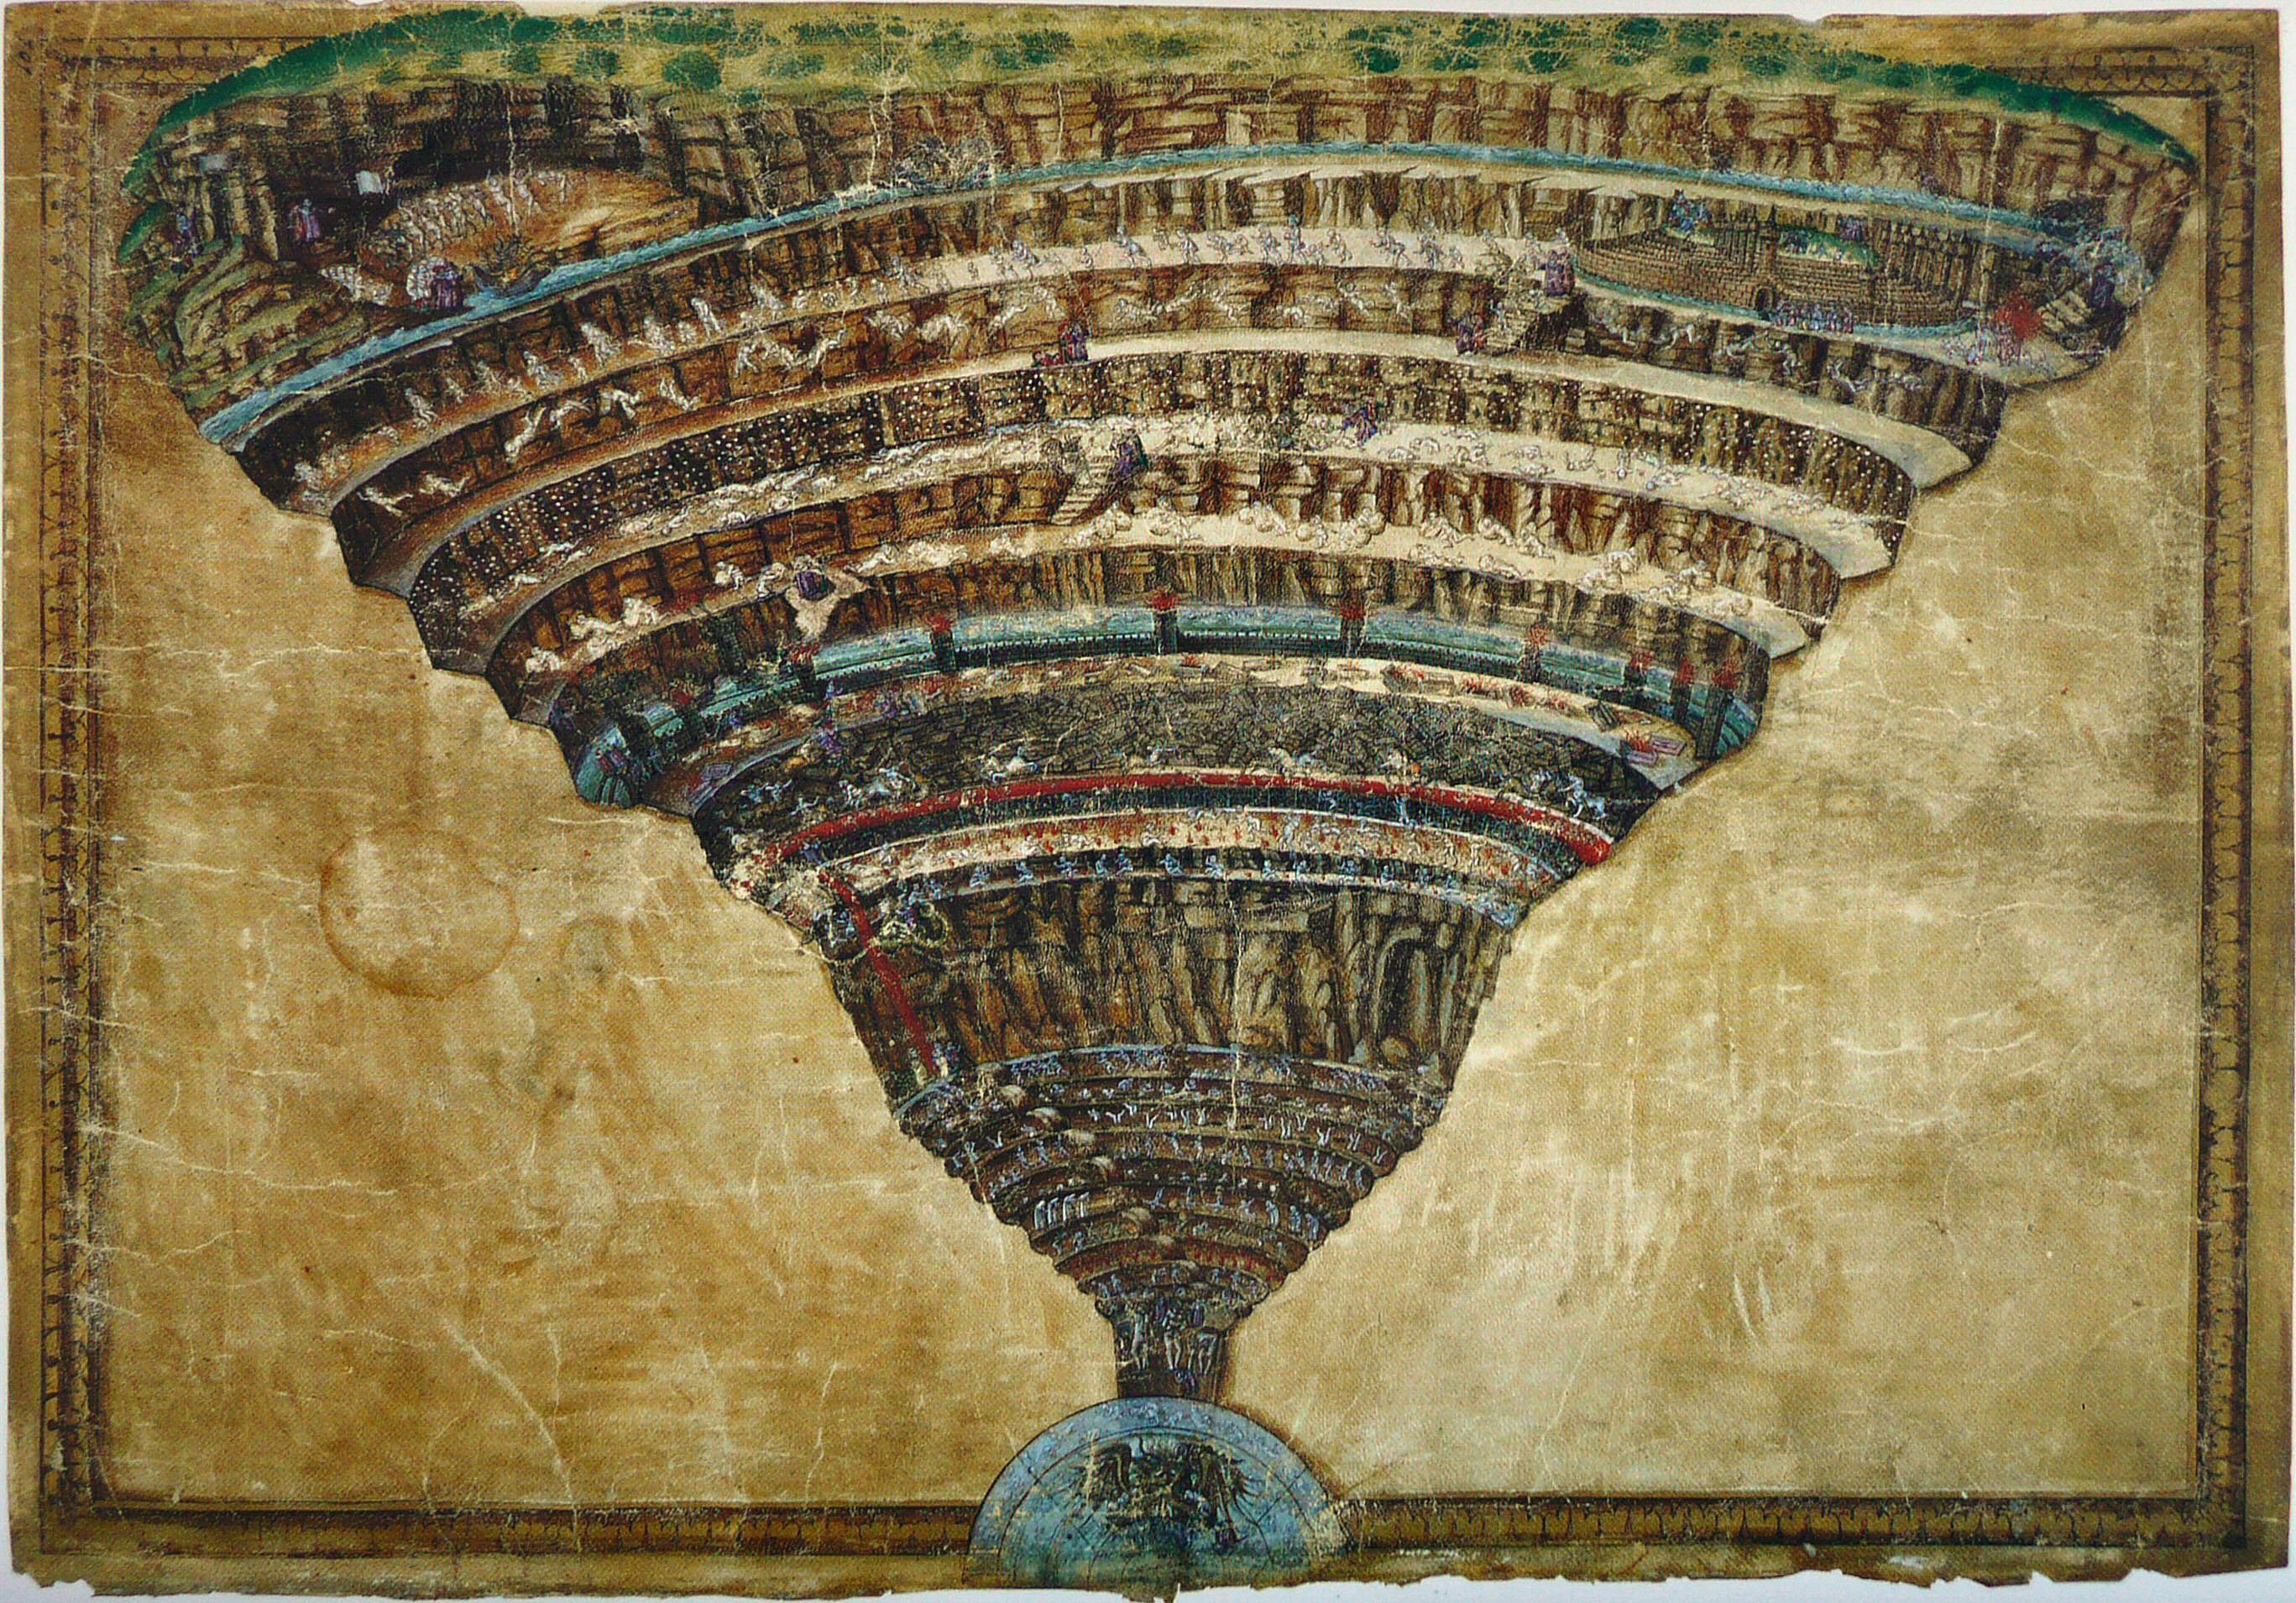 Featured Image of Dissecting the concept of Collective unconscious, Sandro Botticelli - La Carte de l'Enfer